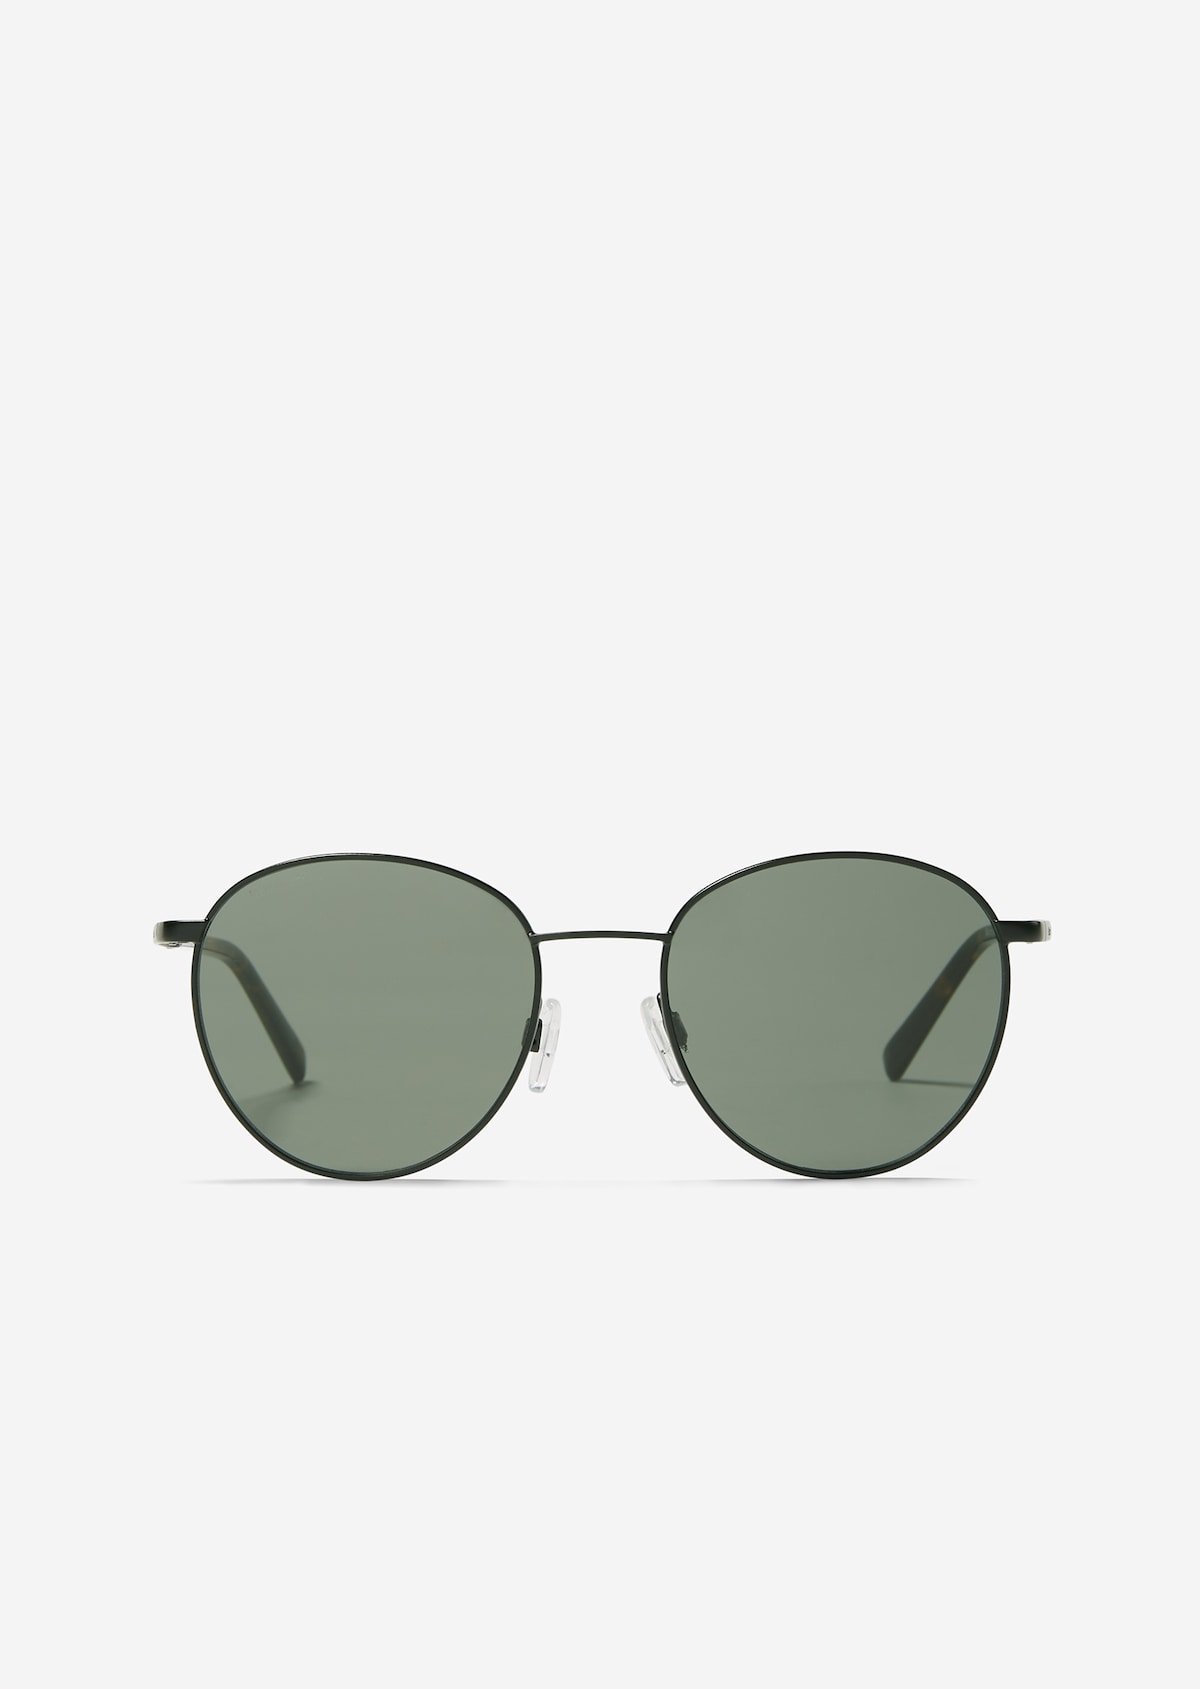 Unisex sunglasses with round lenses - black | Sunglasses | MARC O’POLO